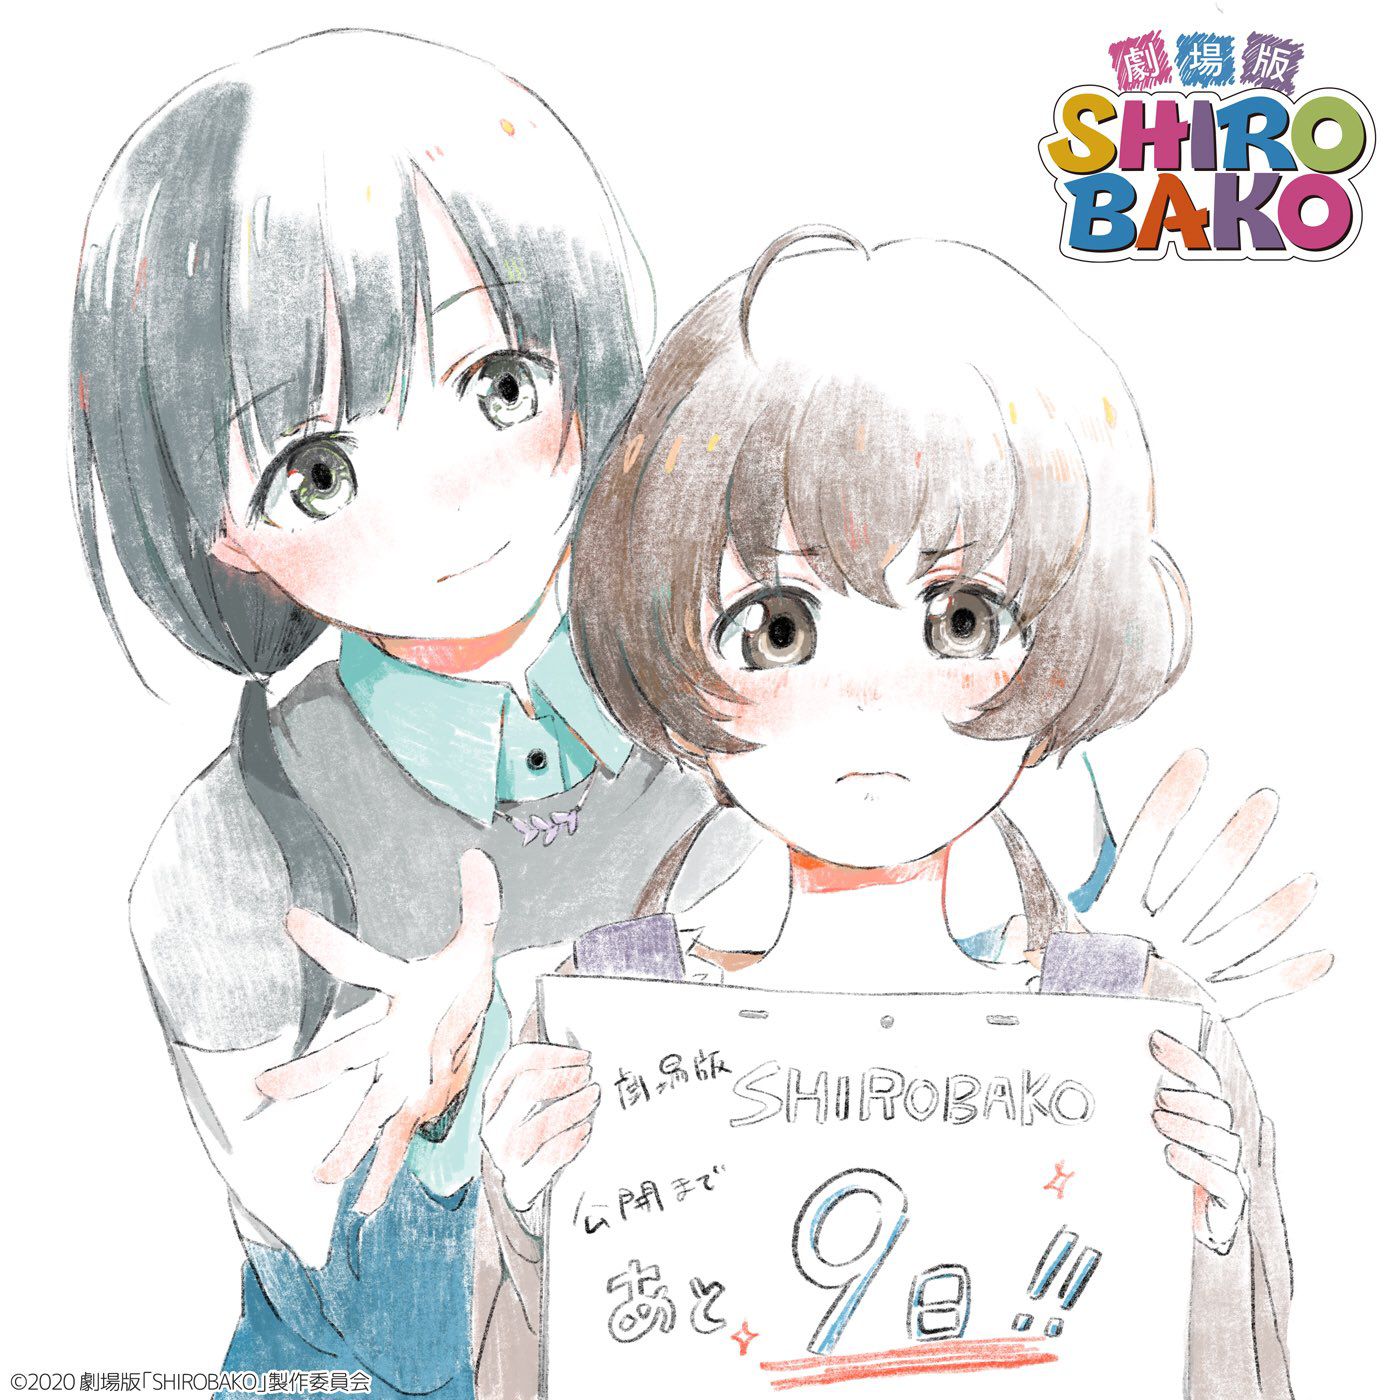 Theatrical version [SHIROBAKO] segawa's very cute illustration in the public countdown illustration! 6